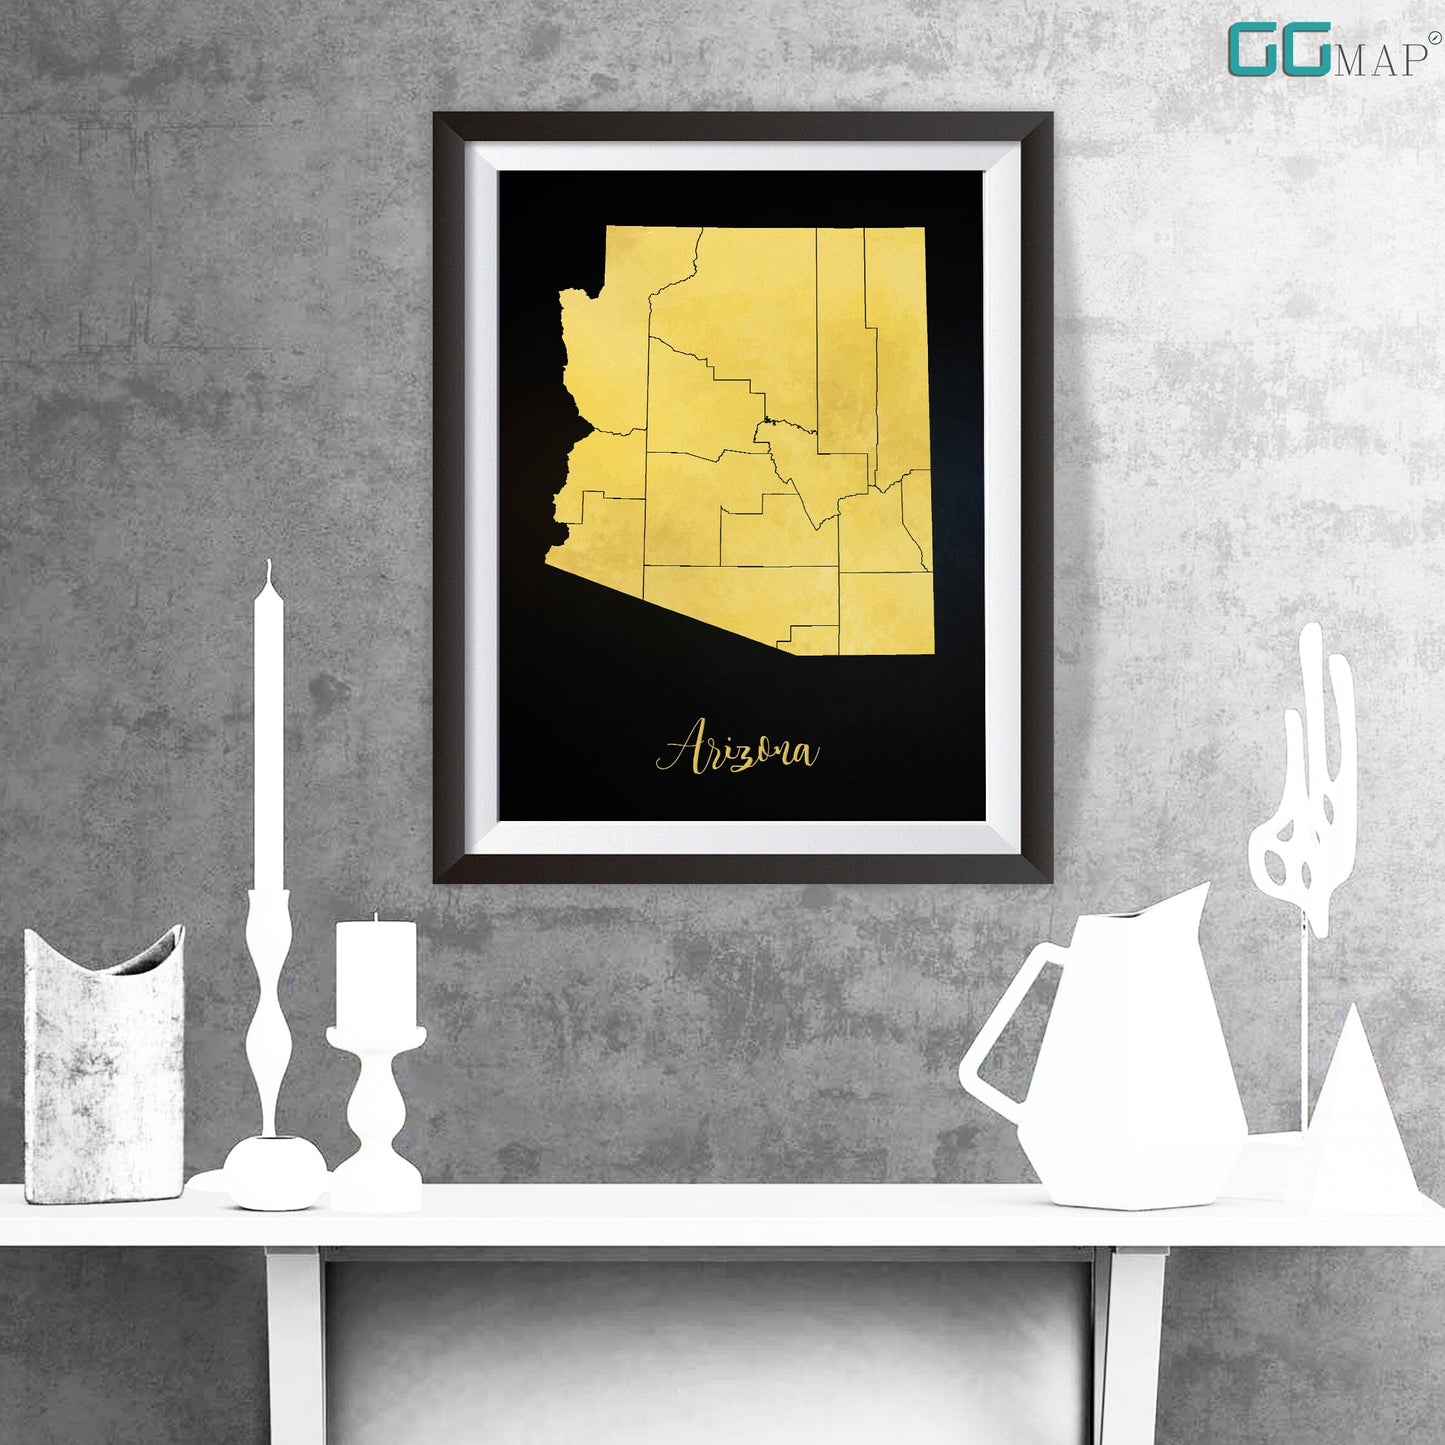 ARIZONA  map - Arizona gold map - Travel poster - Home Decor - Wall decor - Office map - Arizona gift - GGmap - Arizona poster